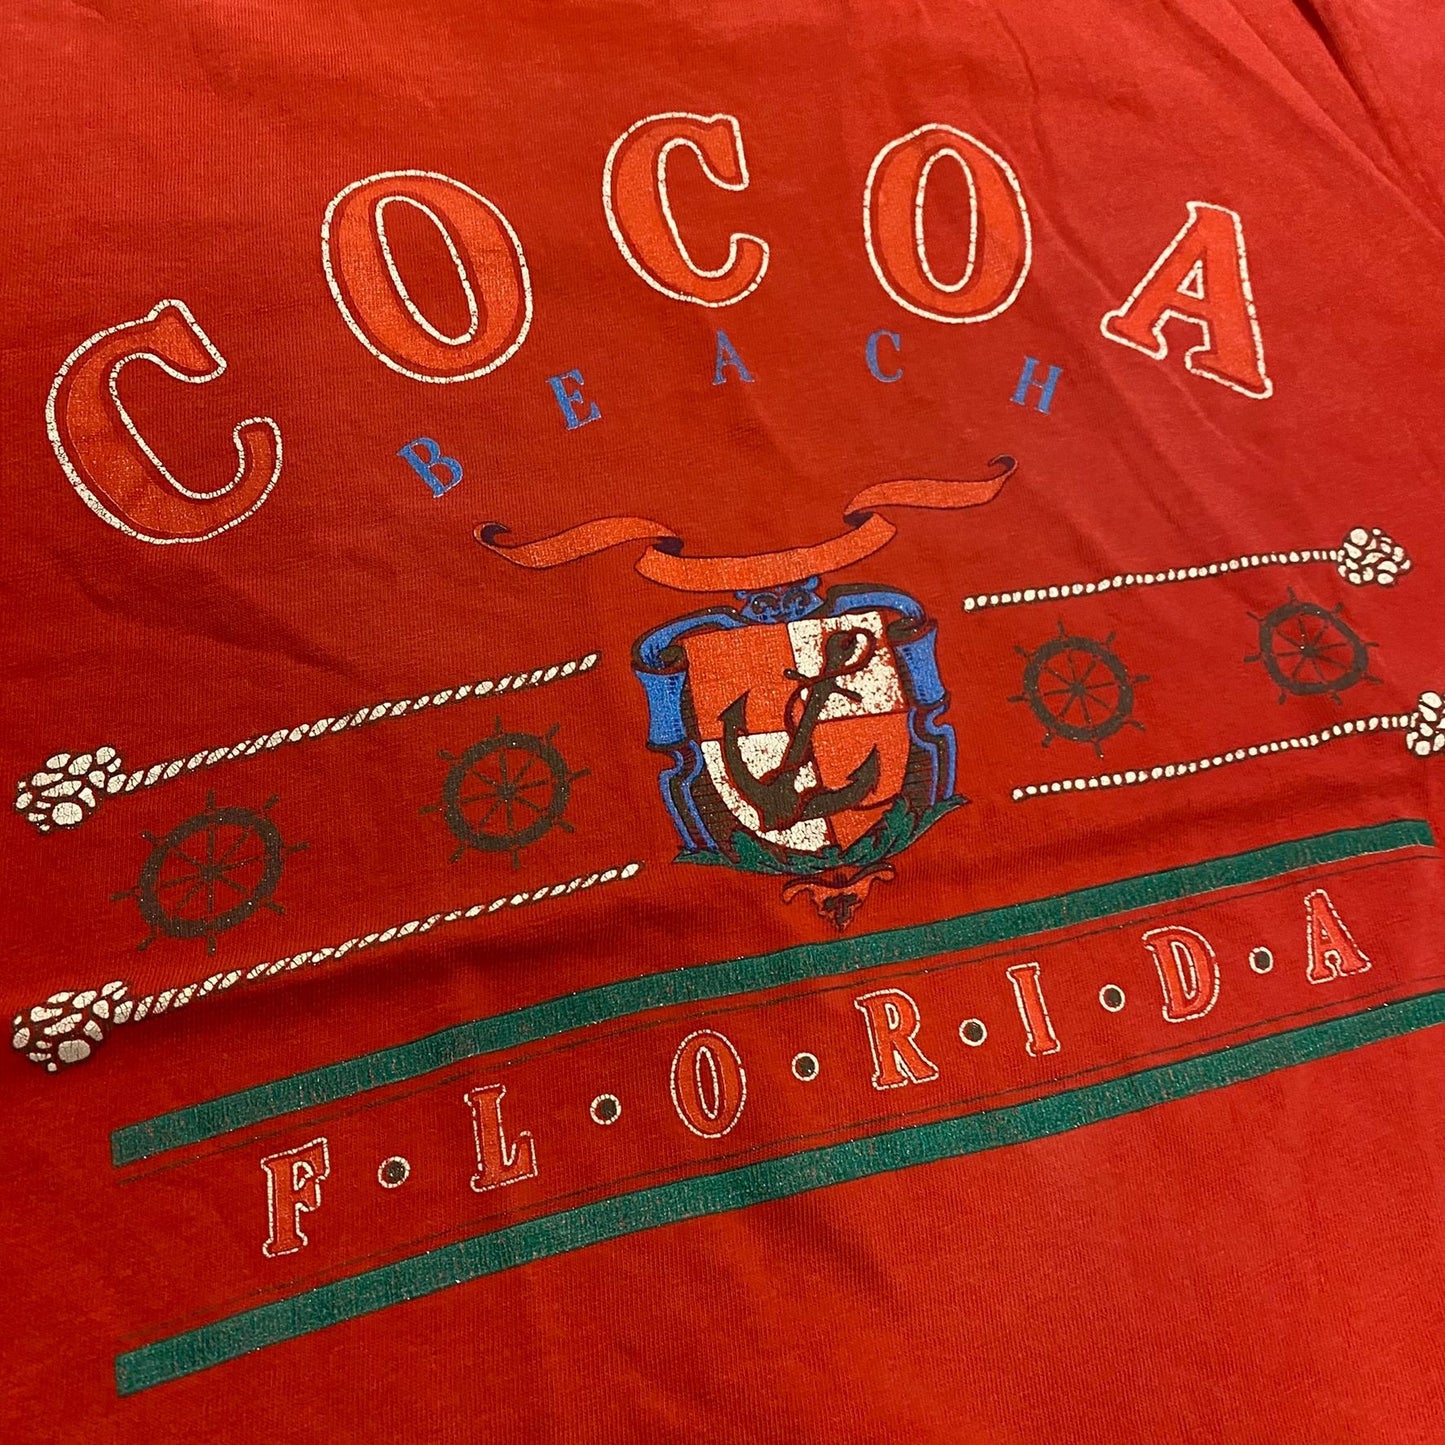 Cocoa Beach Florida Vintage T-Shirt